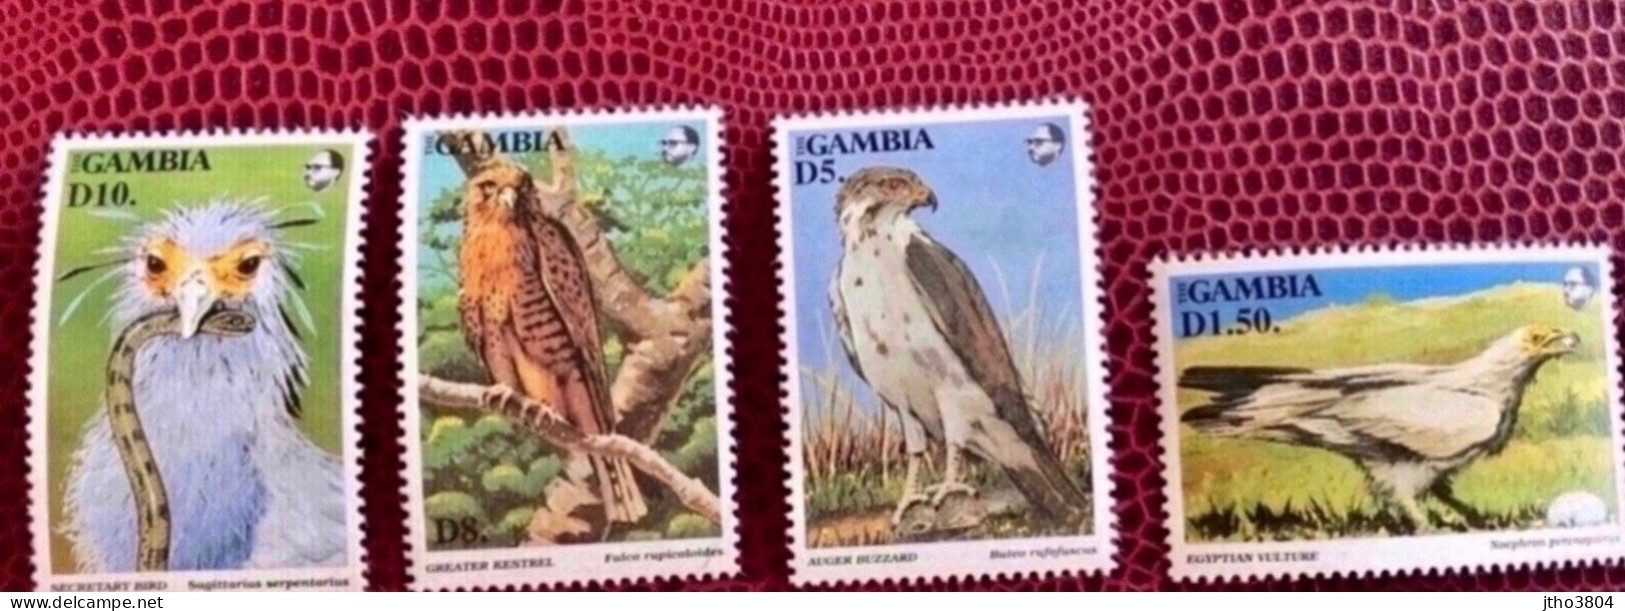 GAMBIE 1993 4 V Neuf MNH ** YT 1319 1320 1321 1322 Rapace Ucello Oiseau Bird Pájaro Vogel THE GAMBIA - Eagles & Birds Of Prey